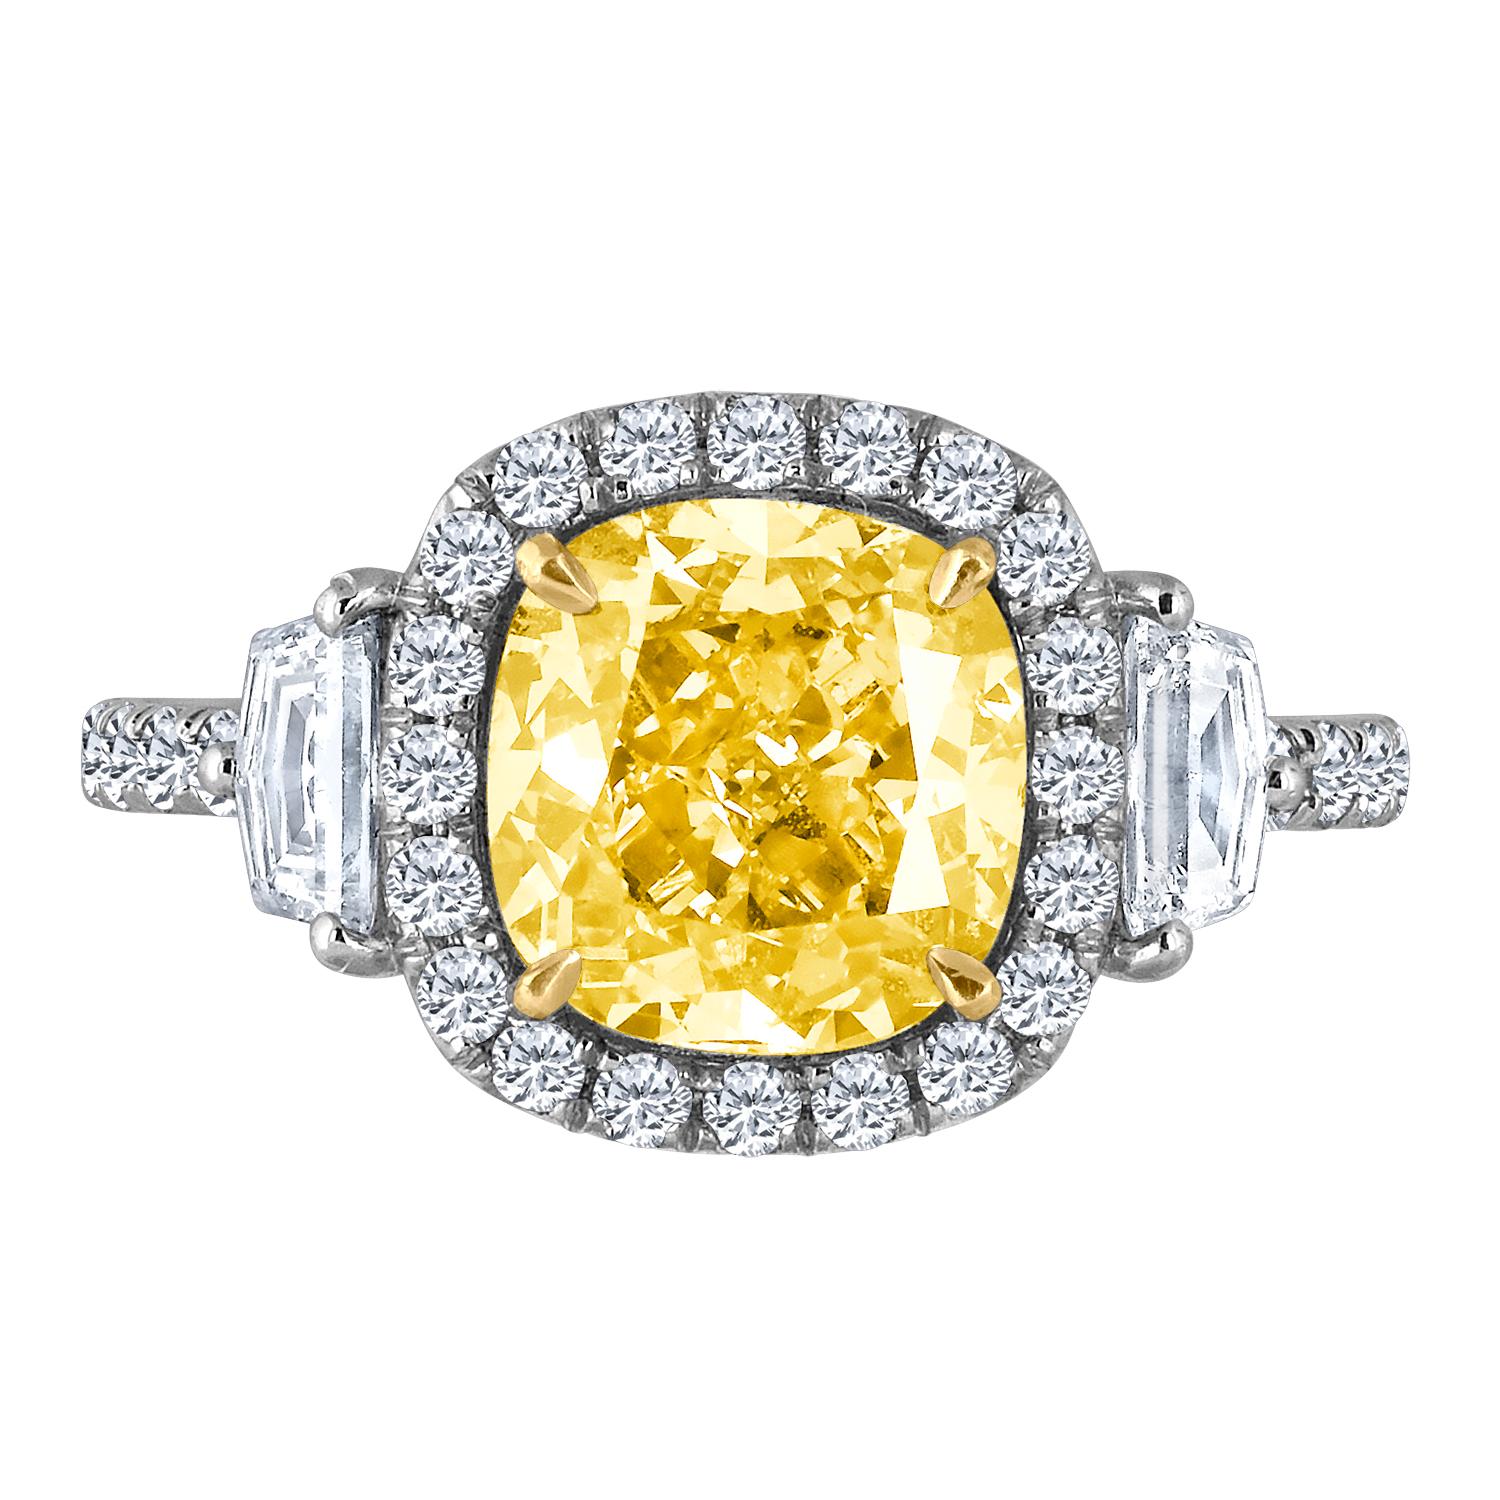 Emilio Jewelry 3.49 Carat GIA Certified Natural Fancy Yellow Diamond Ring